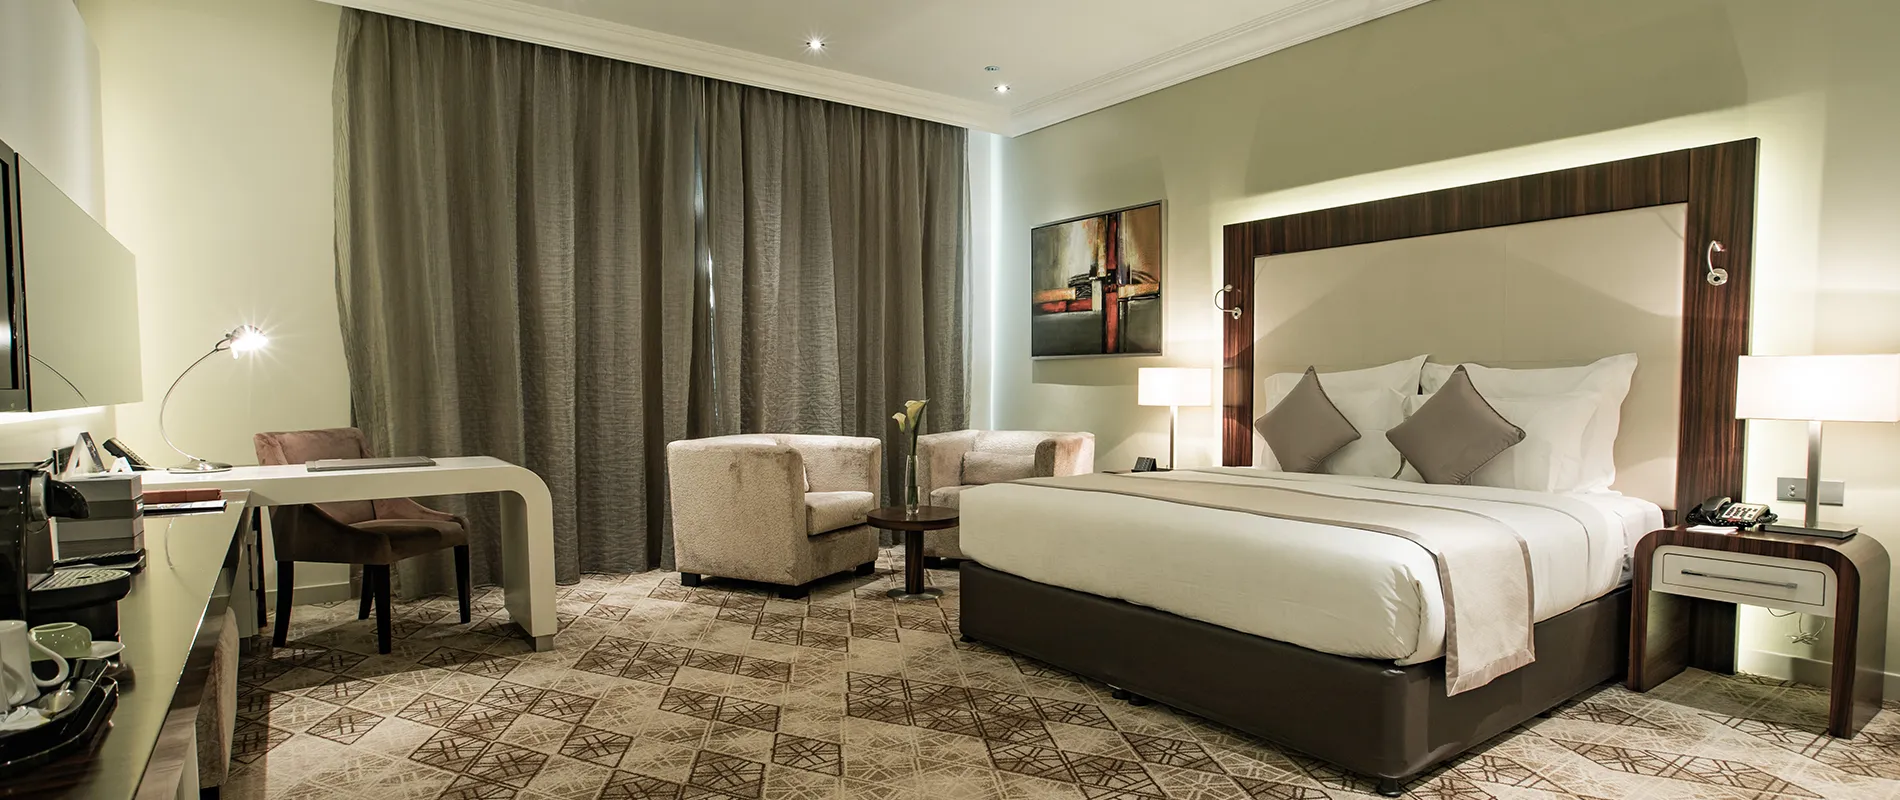 Elite Byblos Hotel - 5 Star hotel in Al Barsha, Dubai